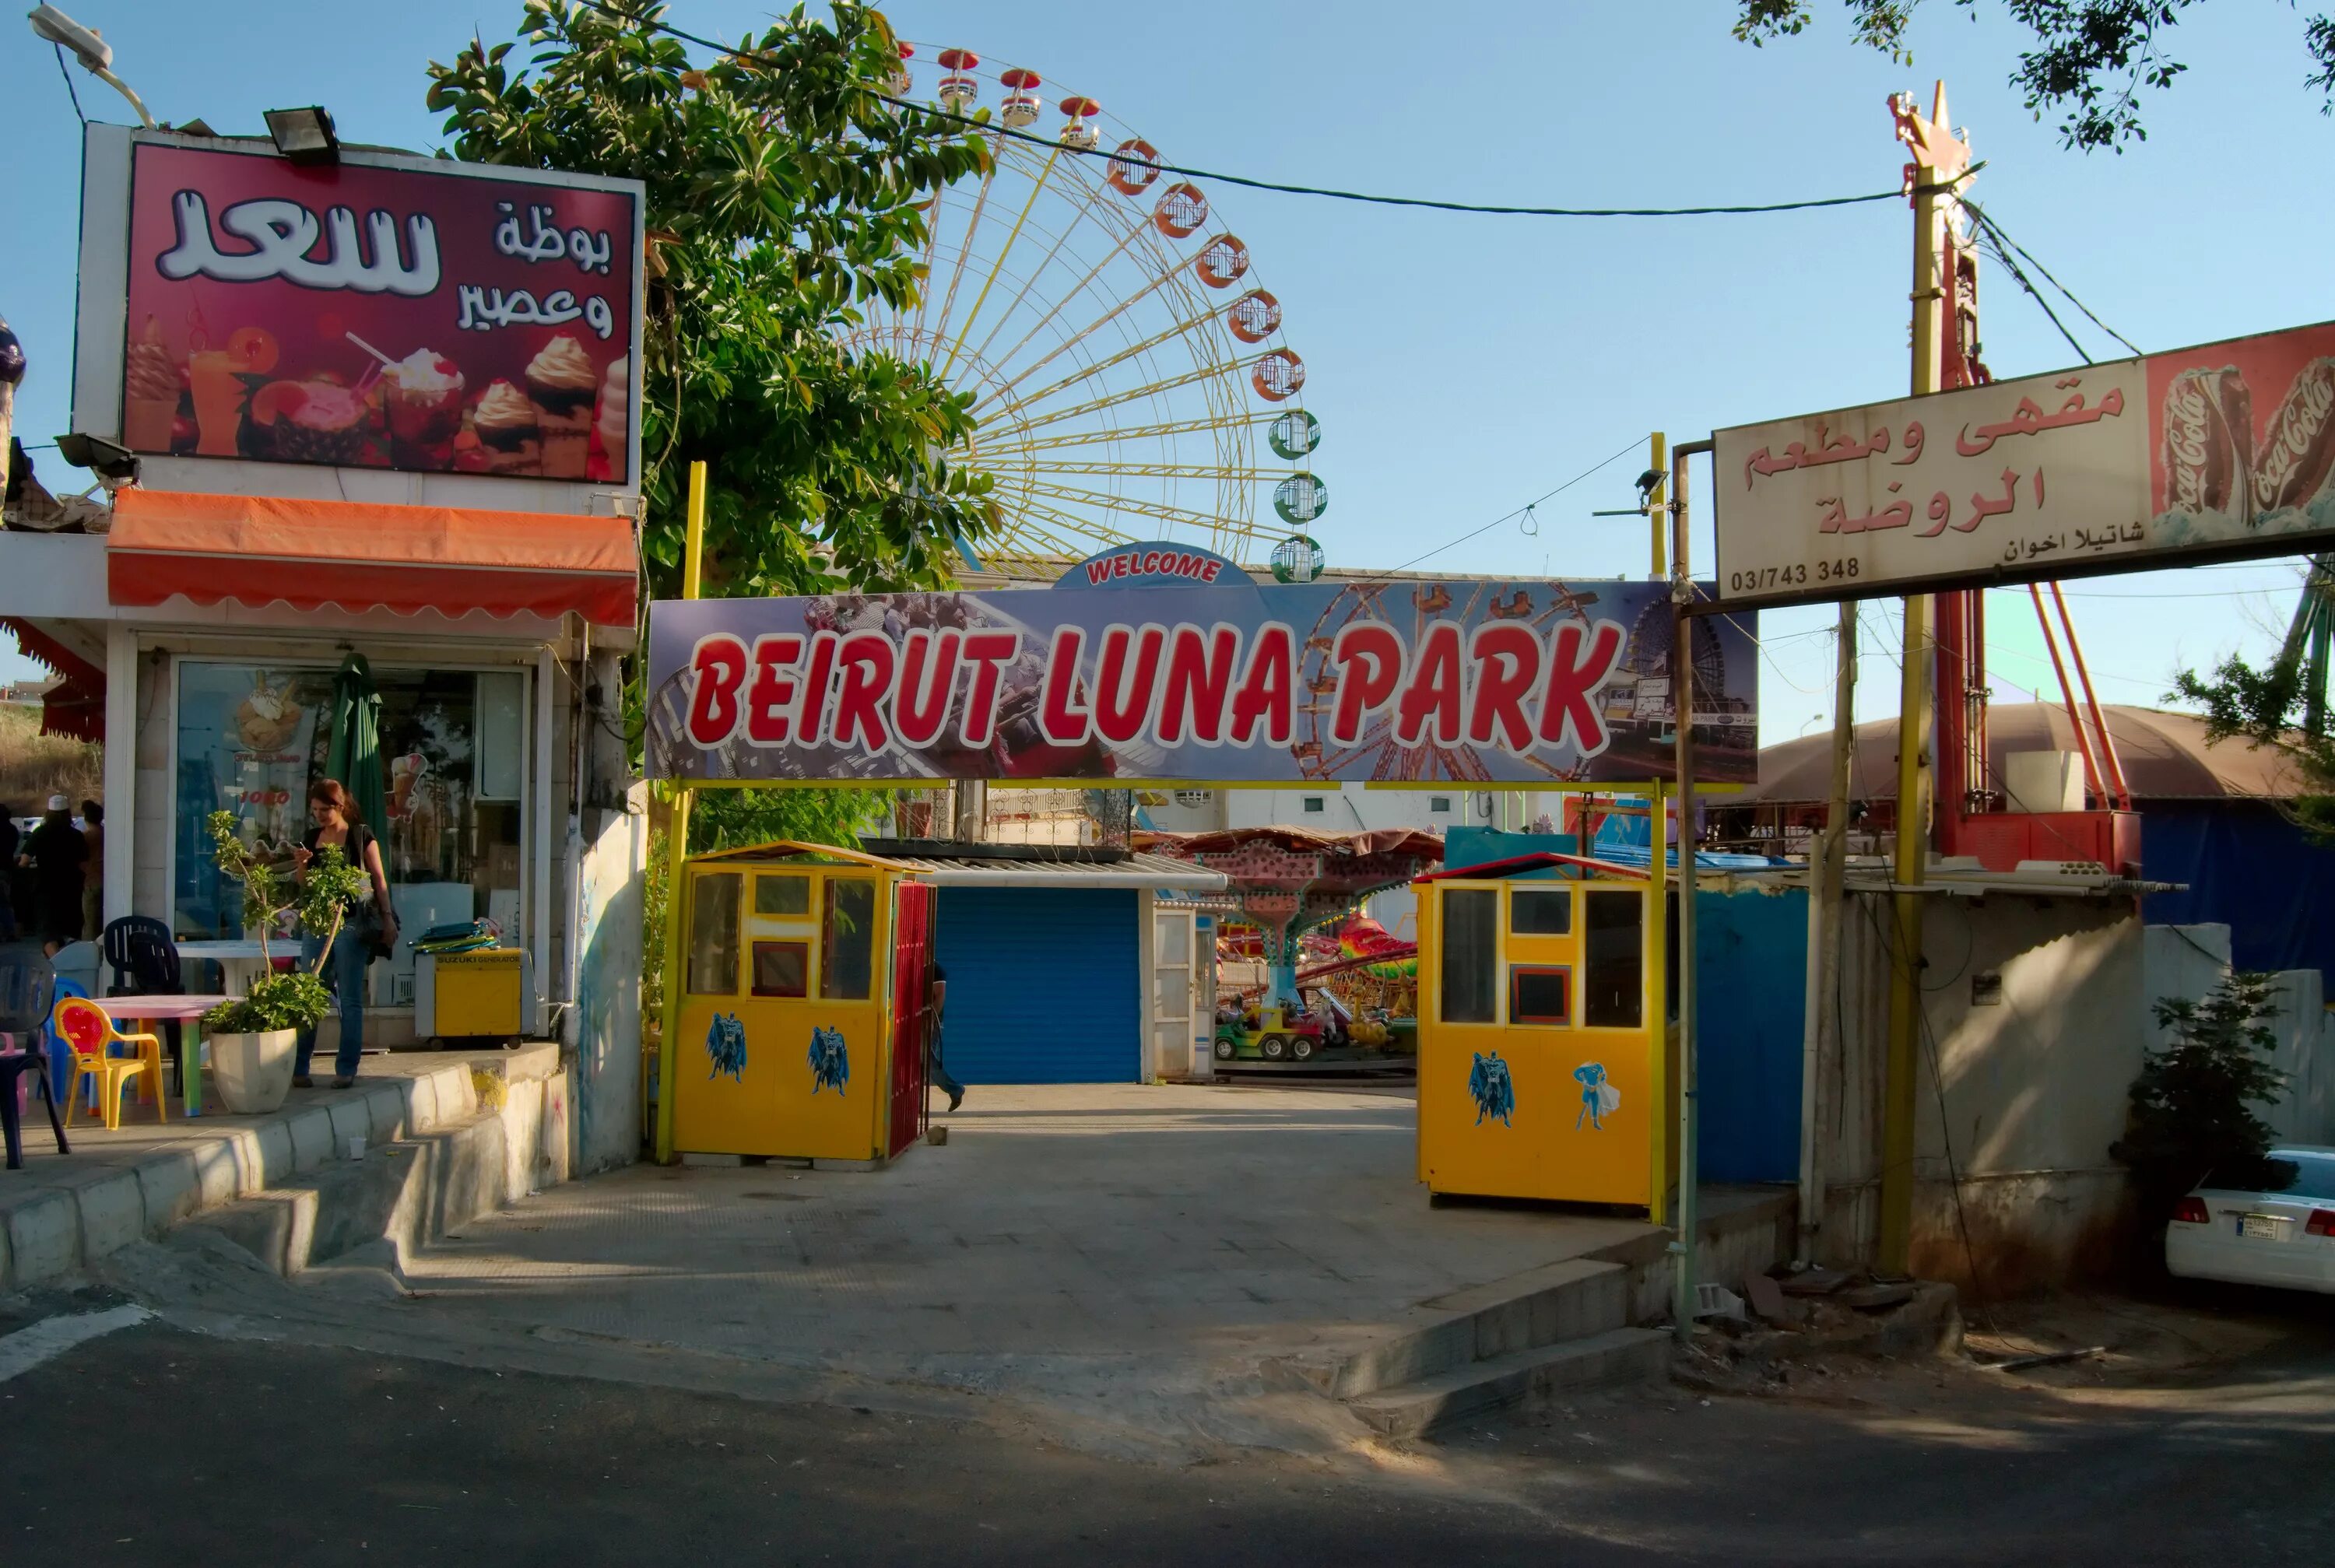 Beirut Luna Park. Luna Park, Cairo. Barcelona Park Luna. Luna Park fargona. Луна парк 3